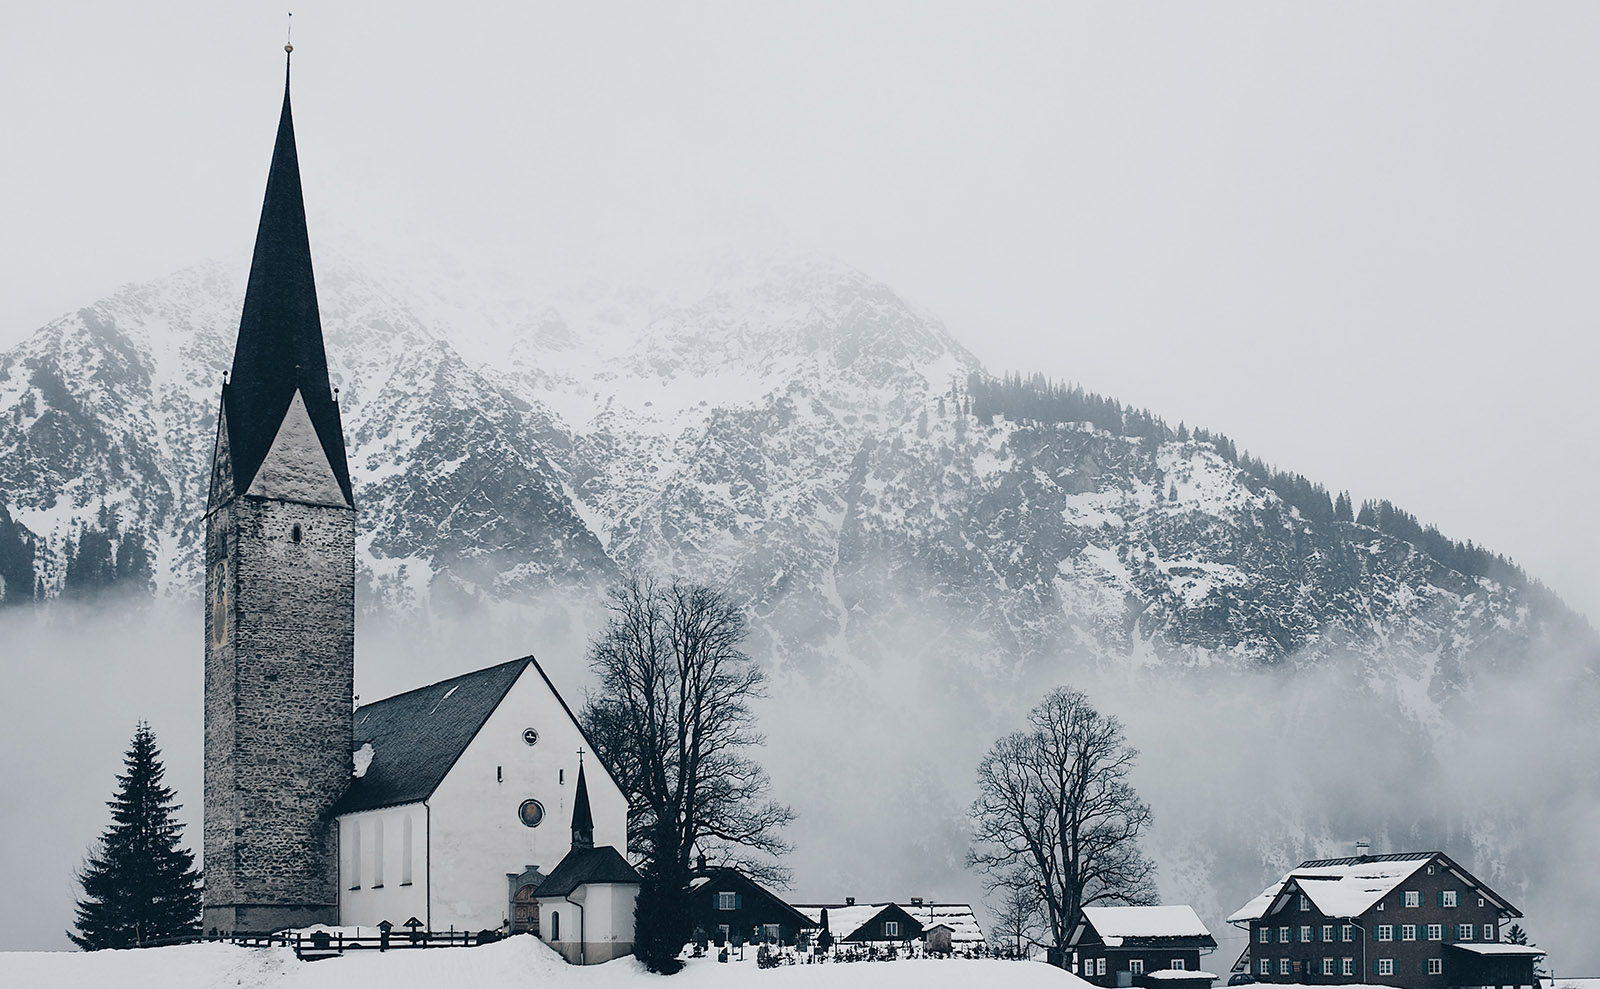 Austria, Candy Canes, Jane Austen Xmas, Homemade Snow Globes & More: Endnotes 23 December